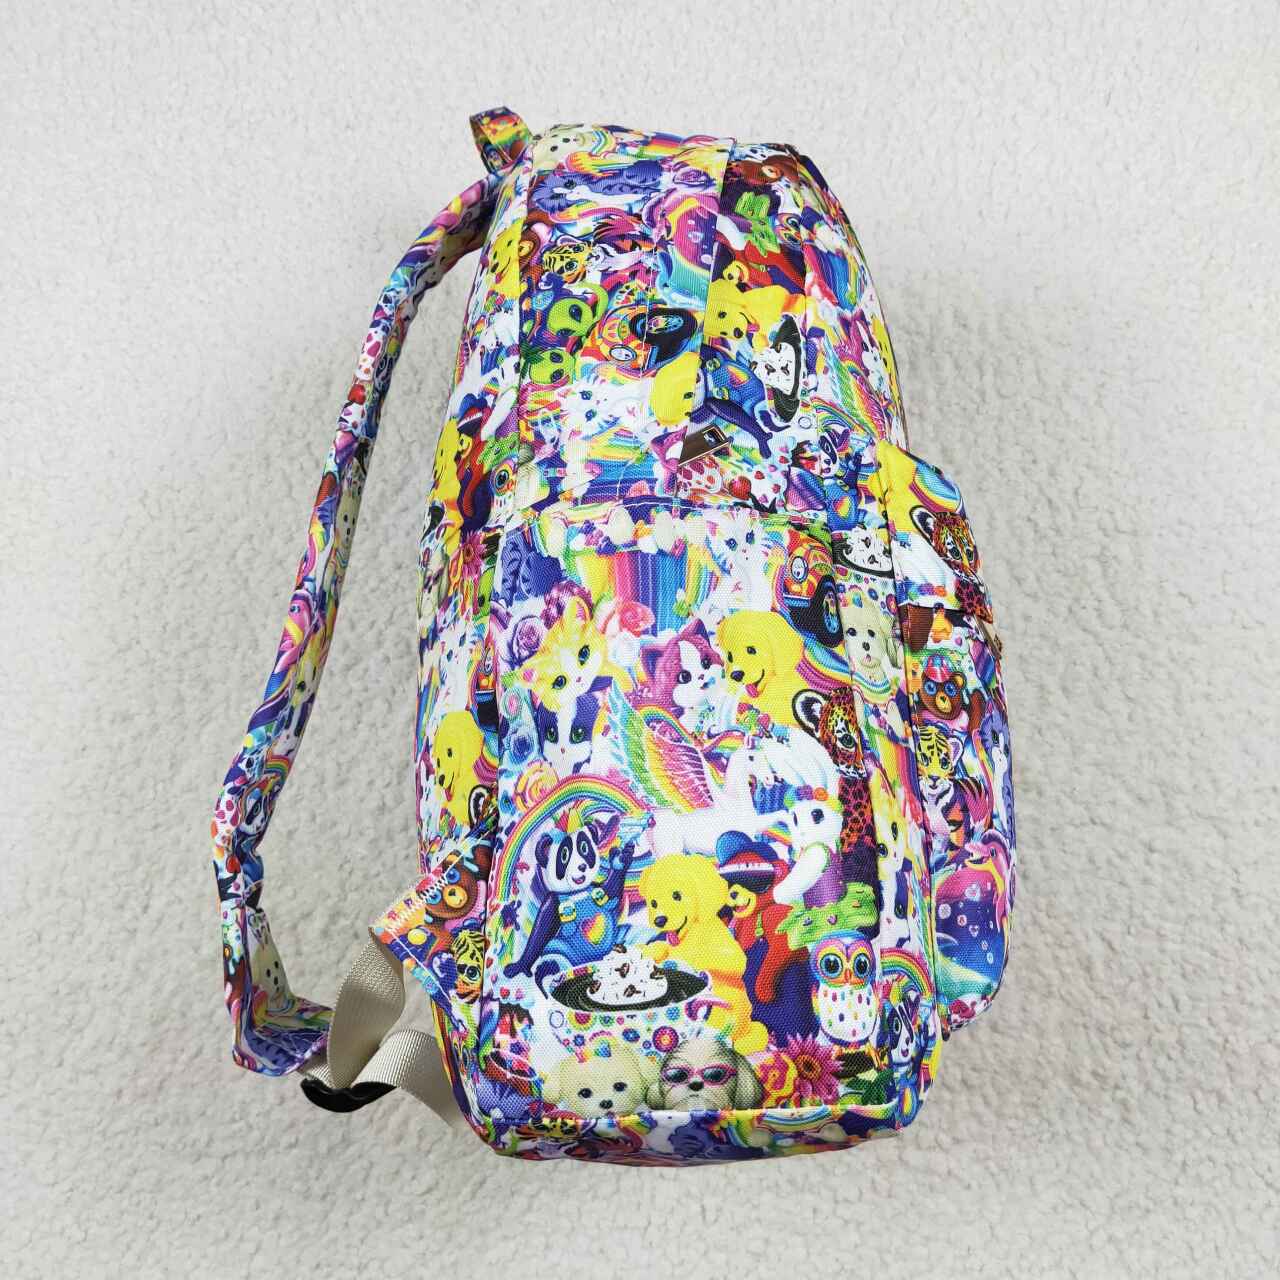 BA0047 colorful cartoon bag backpack